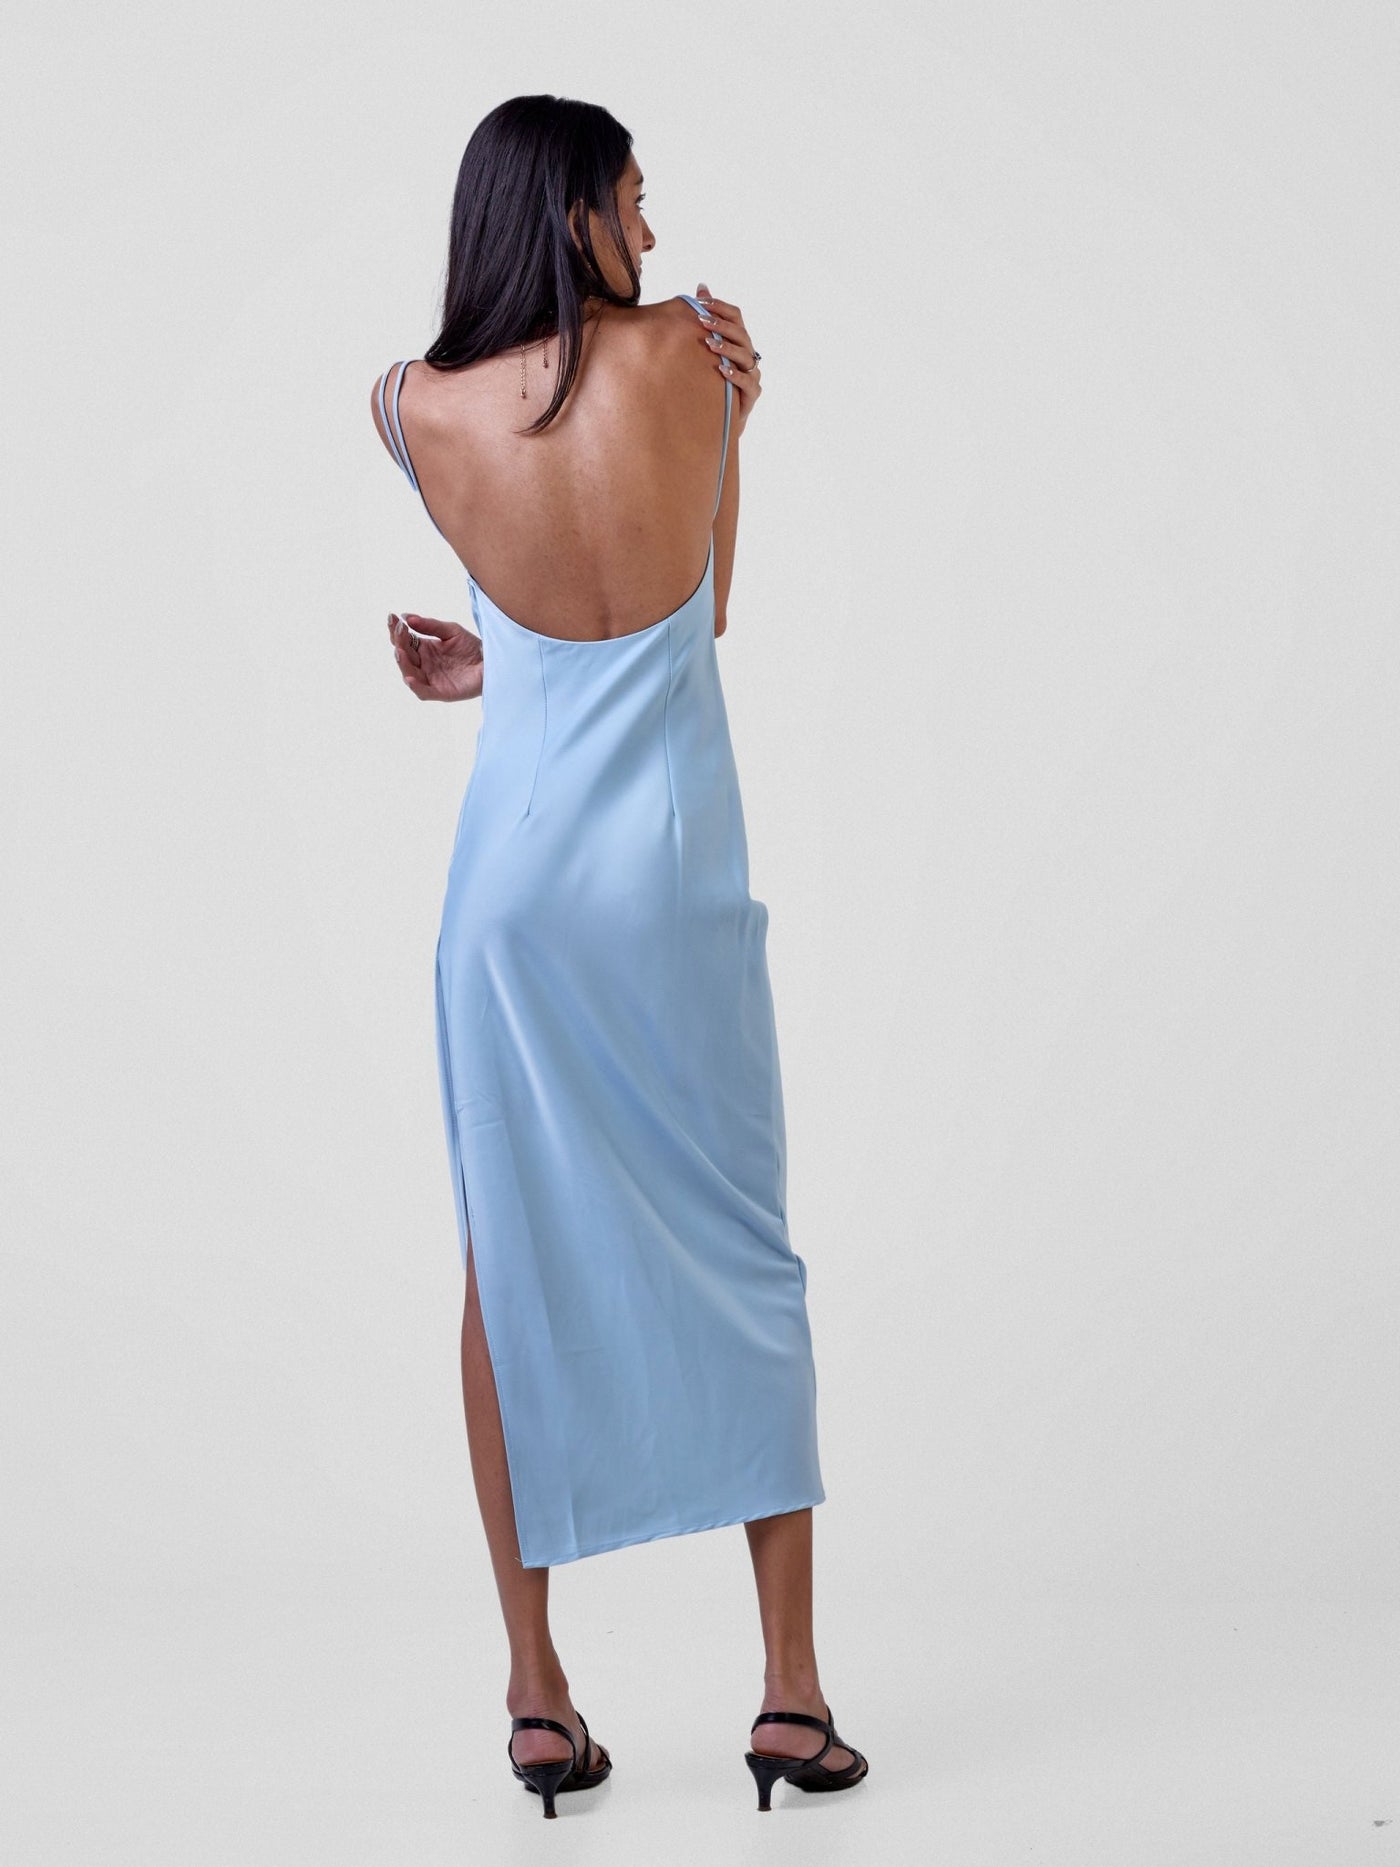 Carrie Wahu X SZ Long Satin Double Strap Dress - Light Blue - Shopzetu